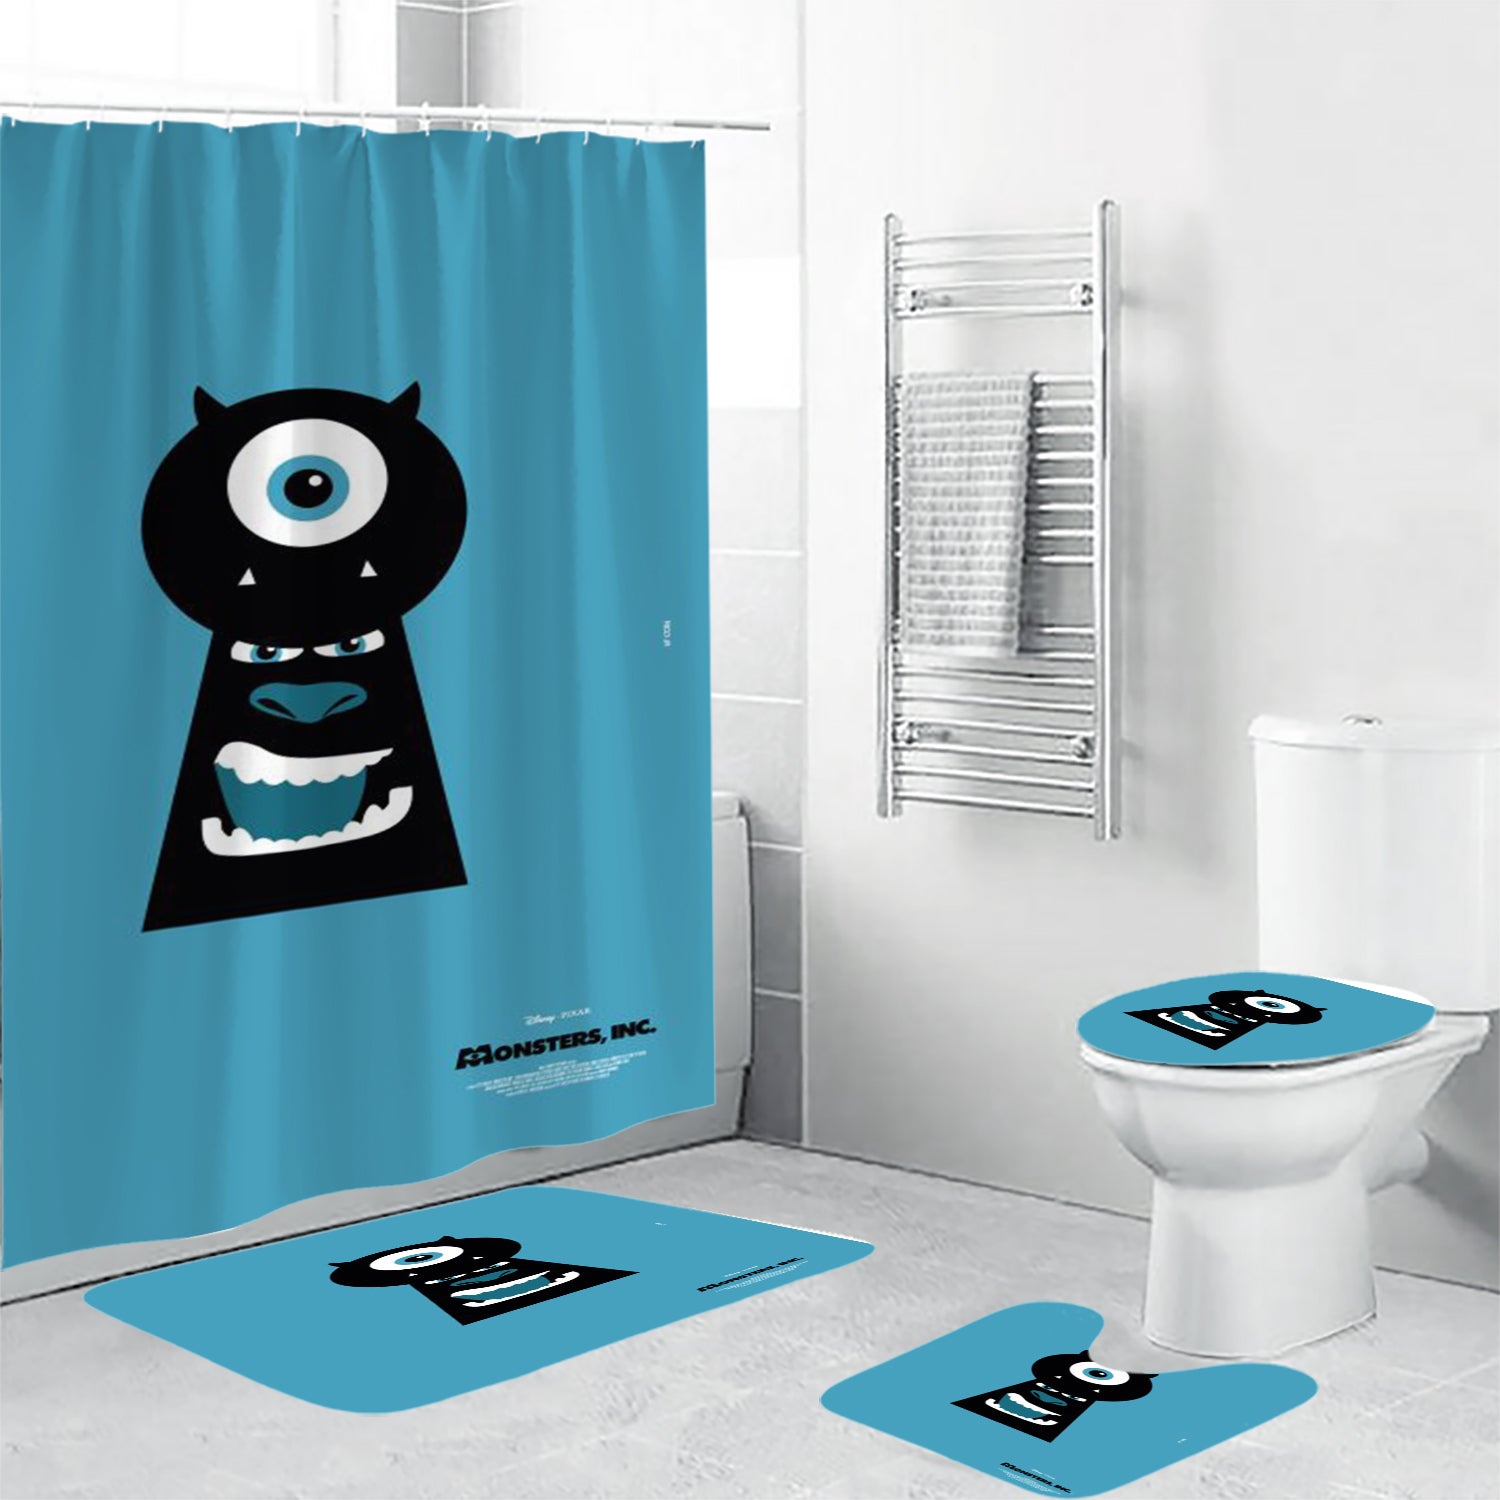 James P Sullivan v7 The Key Monsters Inc Monsters University Movie Disney Pixar Waterproof Shower Curtain Non-Slip Toilet Lid Cover Bath Mat - Bathroom Set